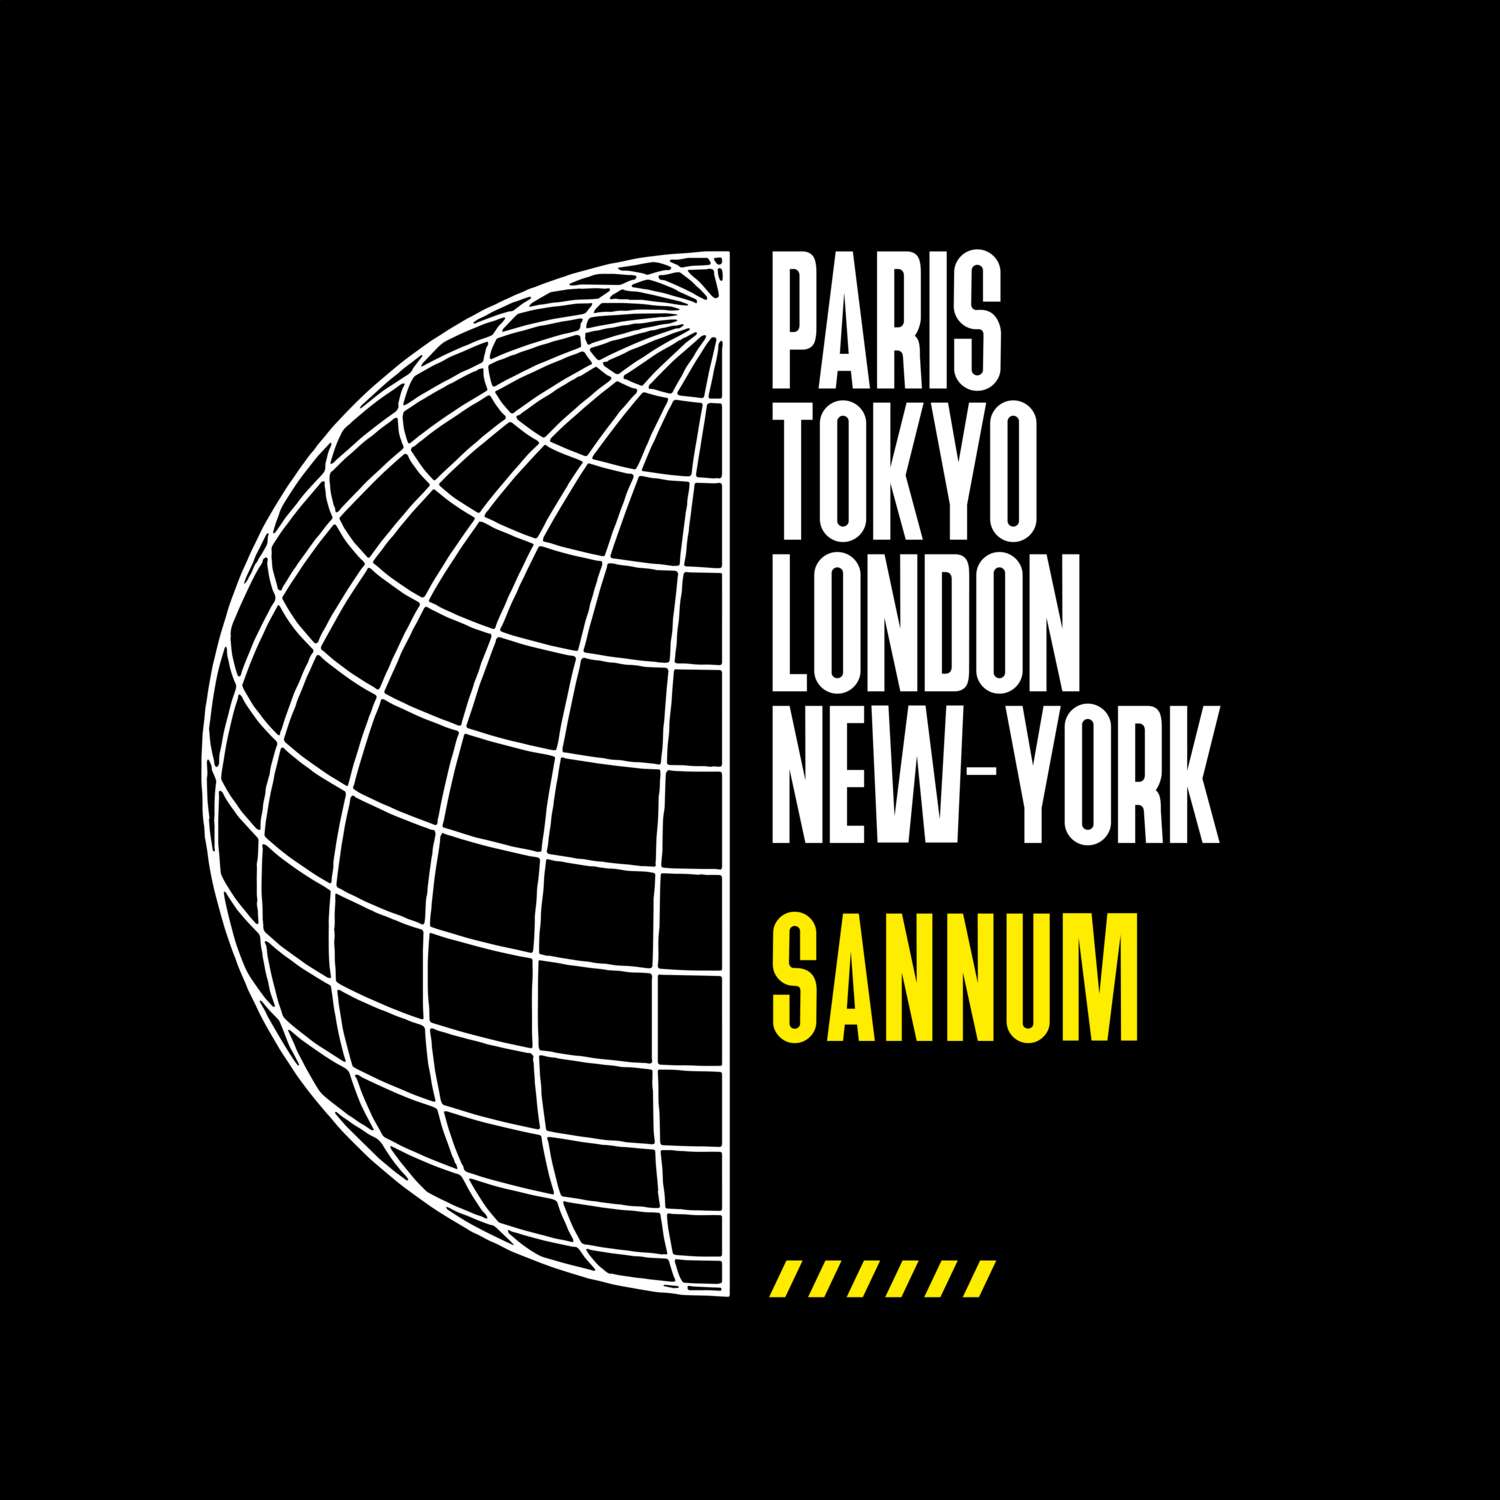 Sannum T-Shirt »Paris Tokyo London«